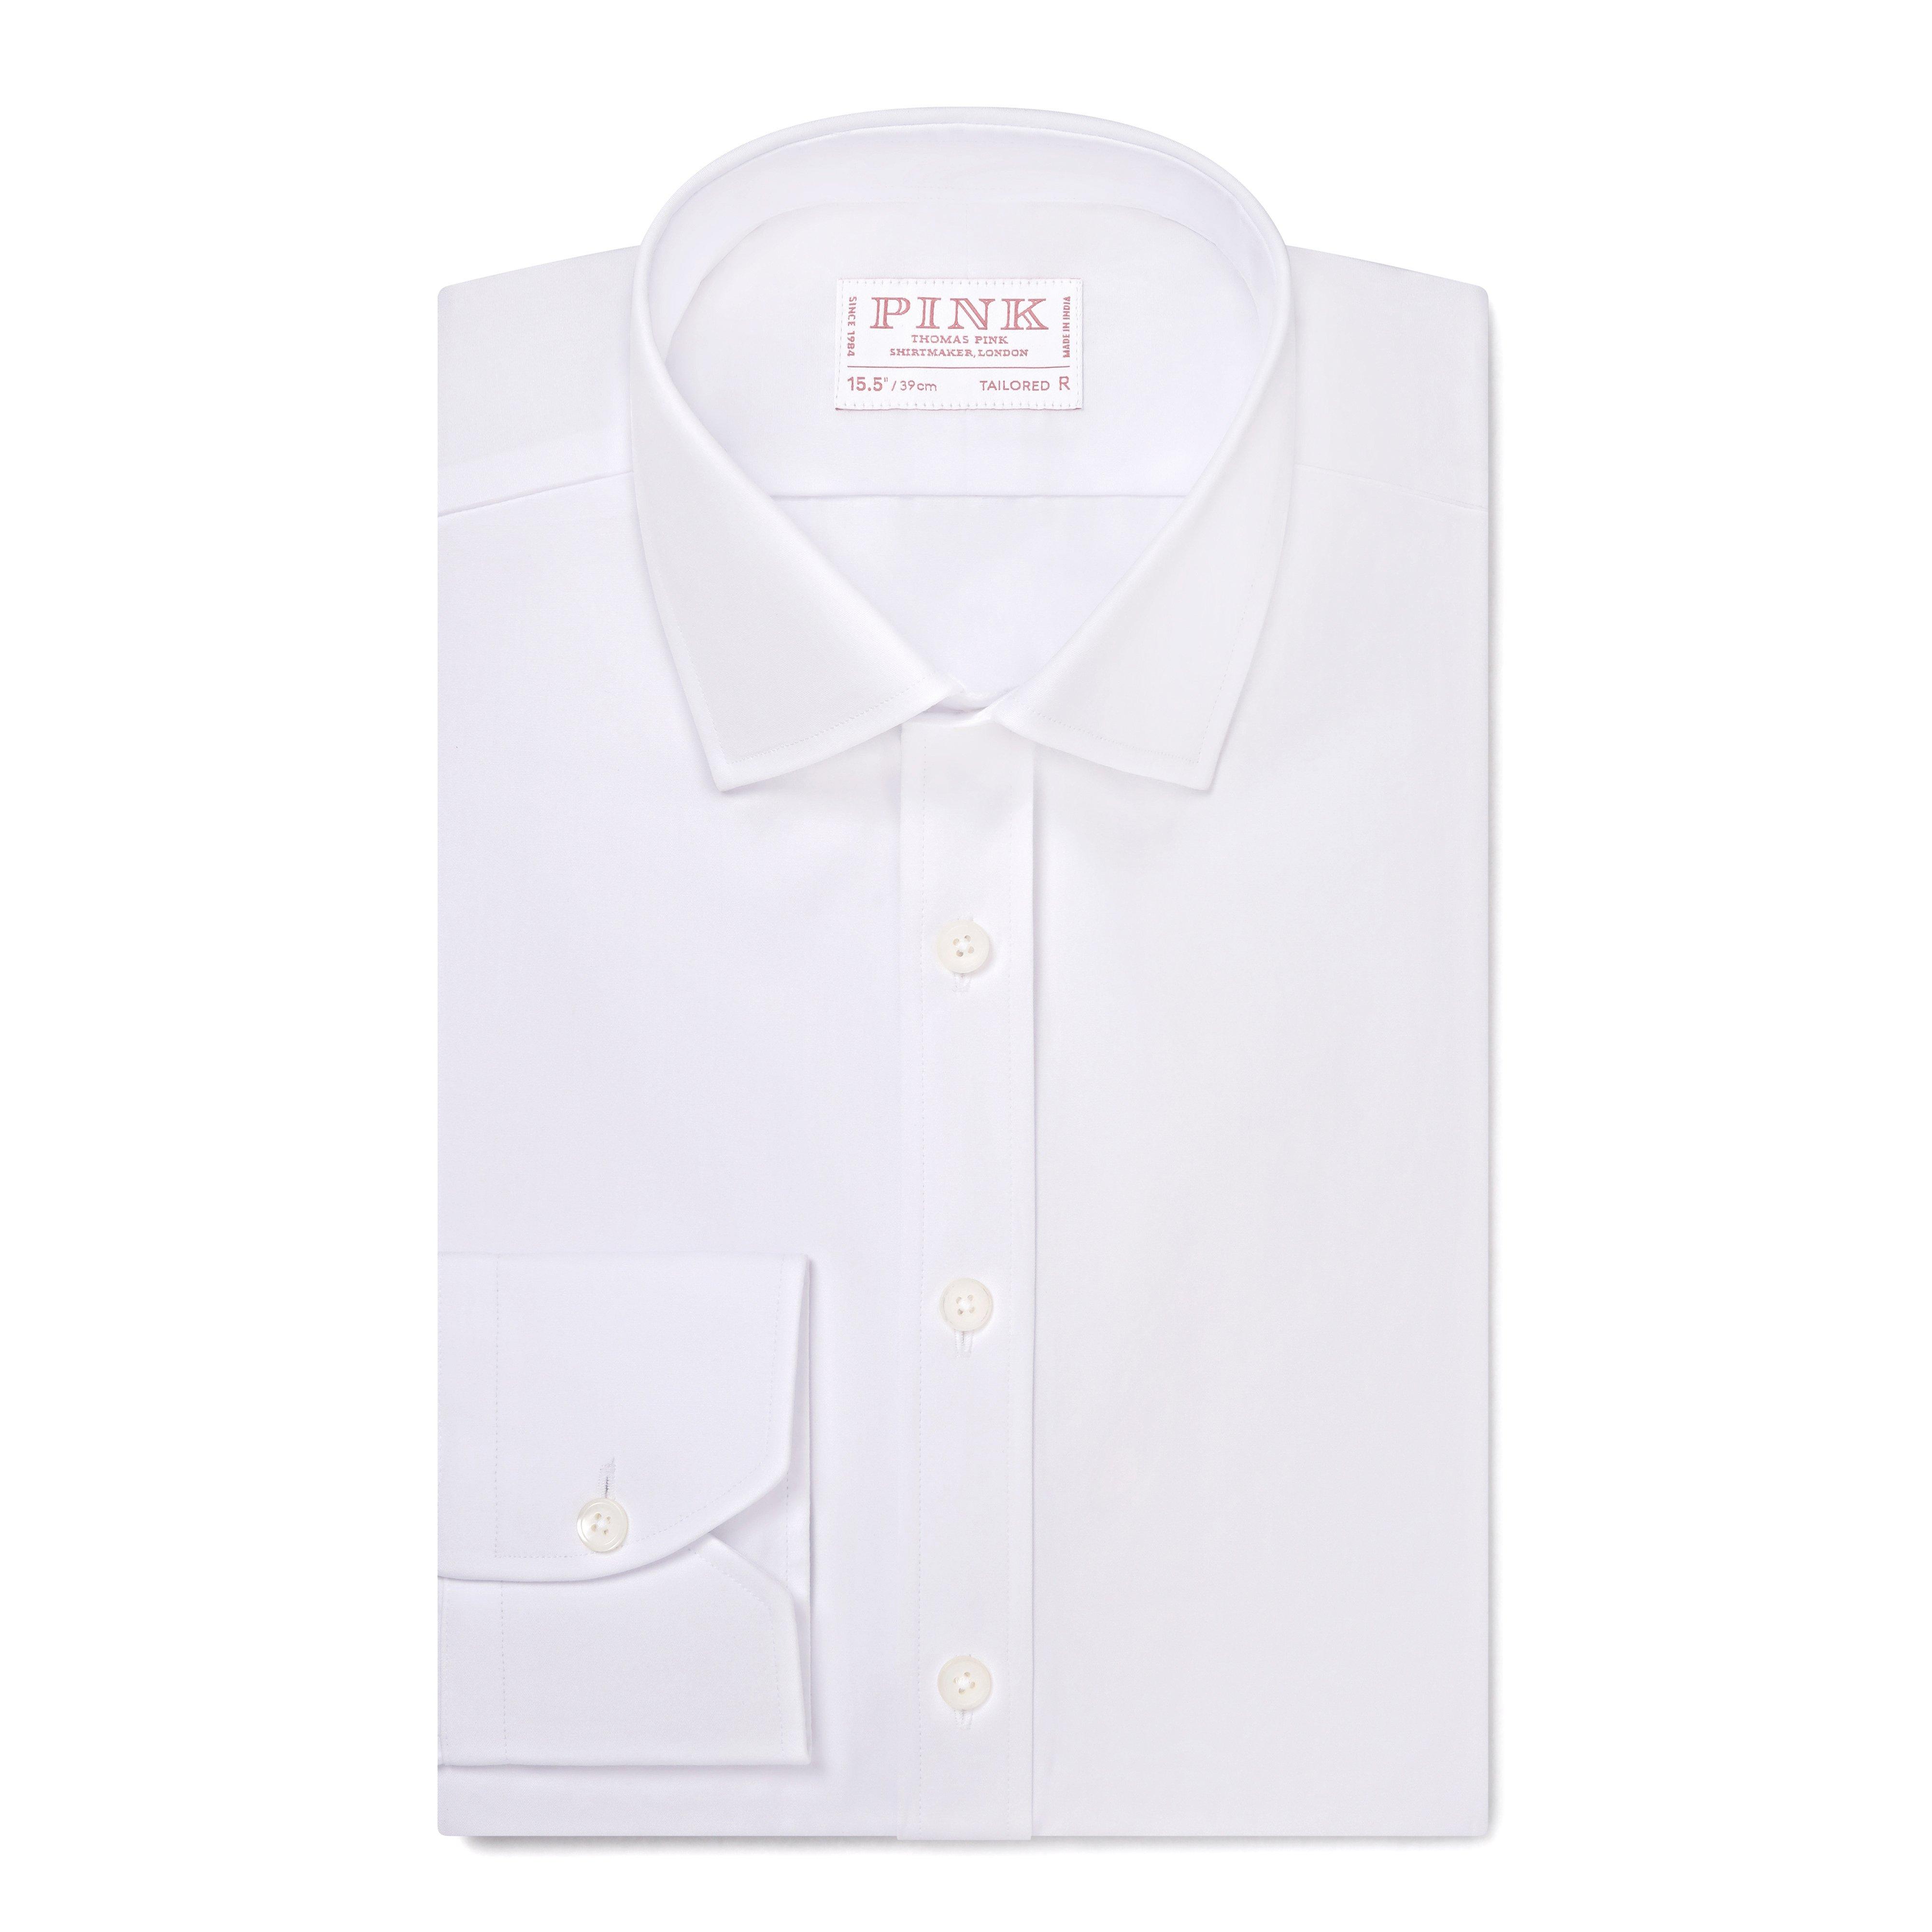 Men' Thomas PINK Cotton Button Down Long Sleeve Shirt in Pink/White Size 15